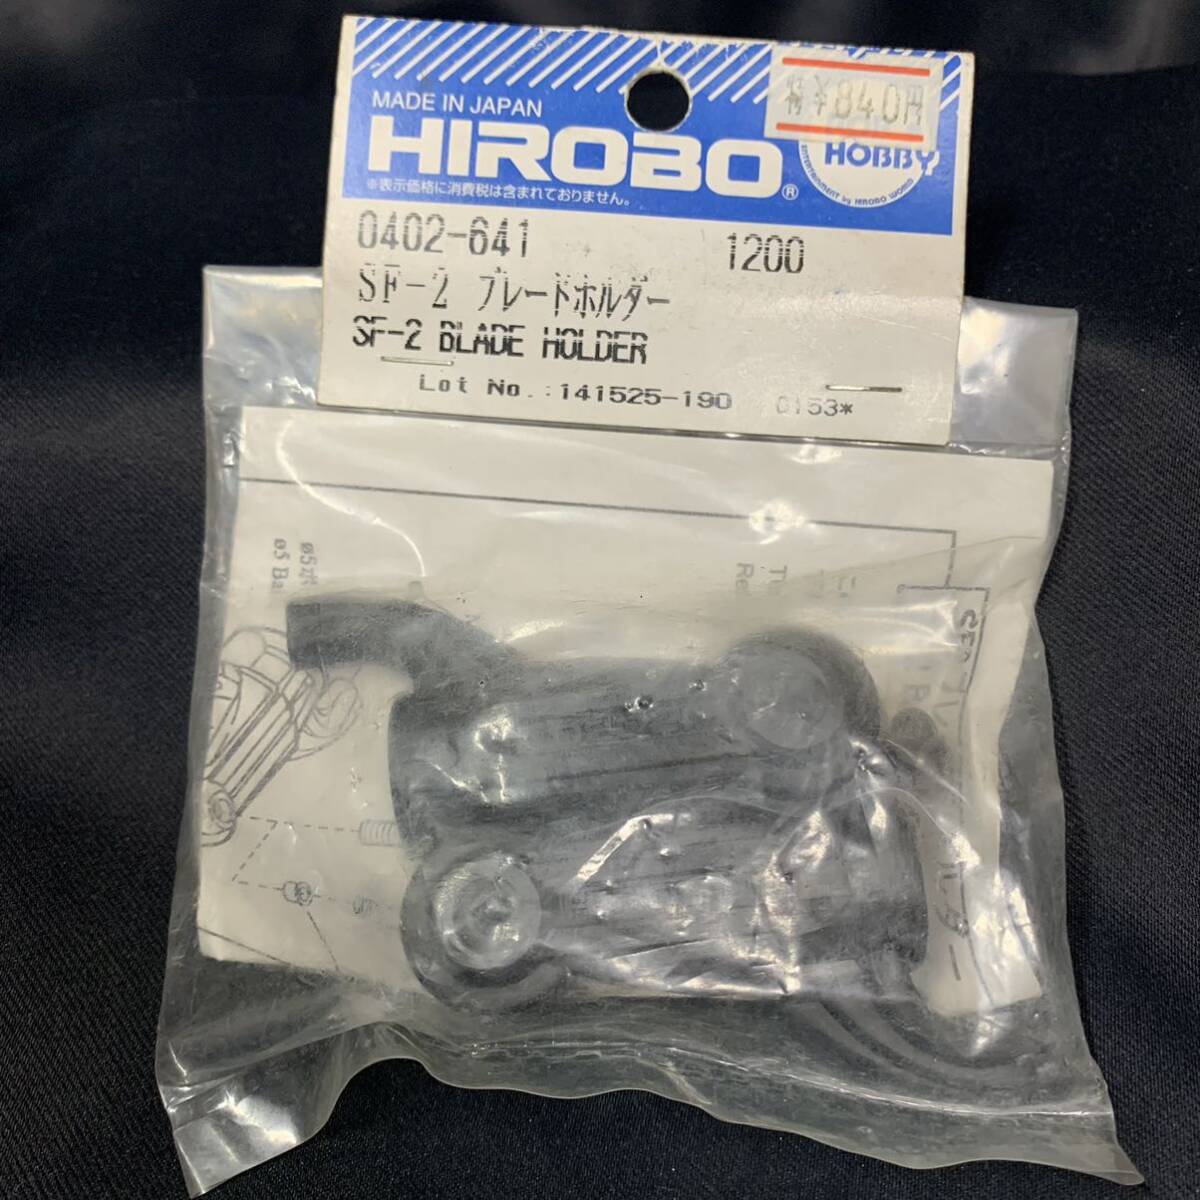 HIROBO ヒロボー SF-2 0402-641ブレードホルダー ラジコンヘリコプター パーツ 希少 当時物の画像1